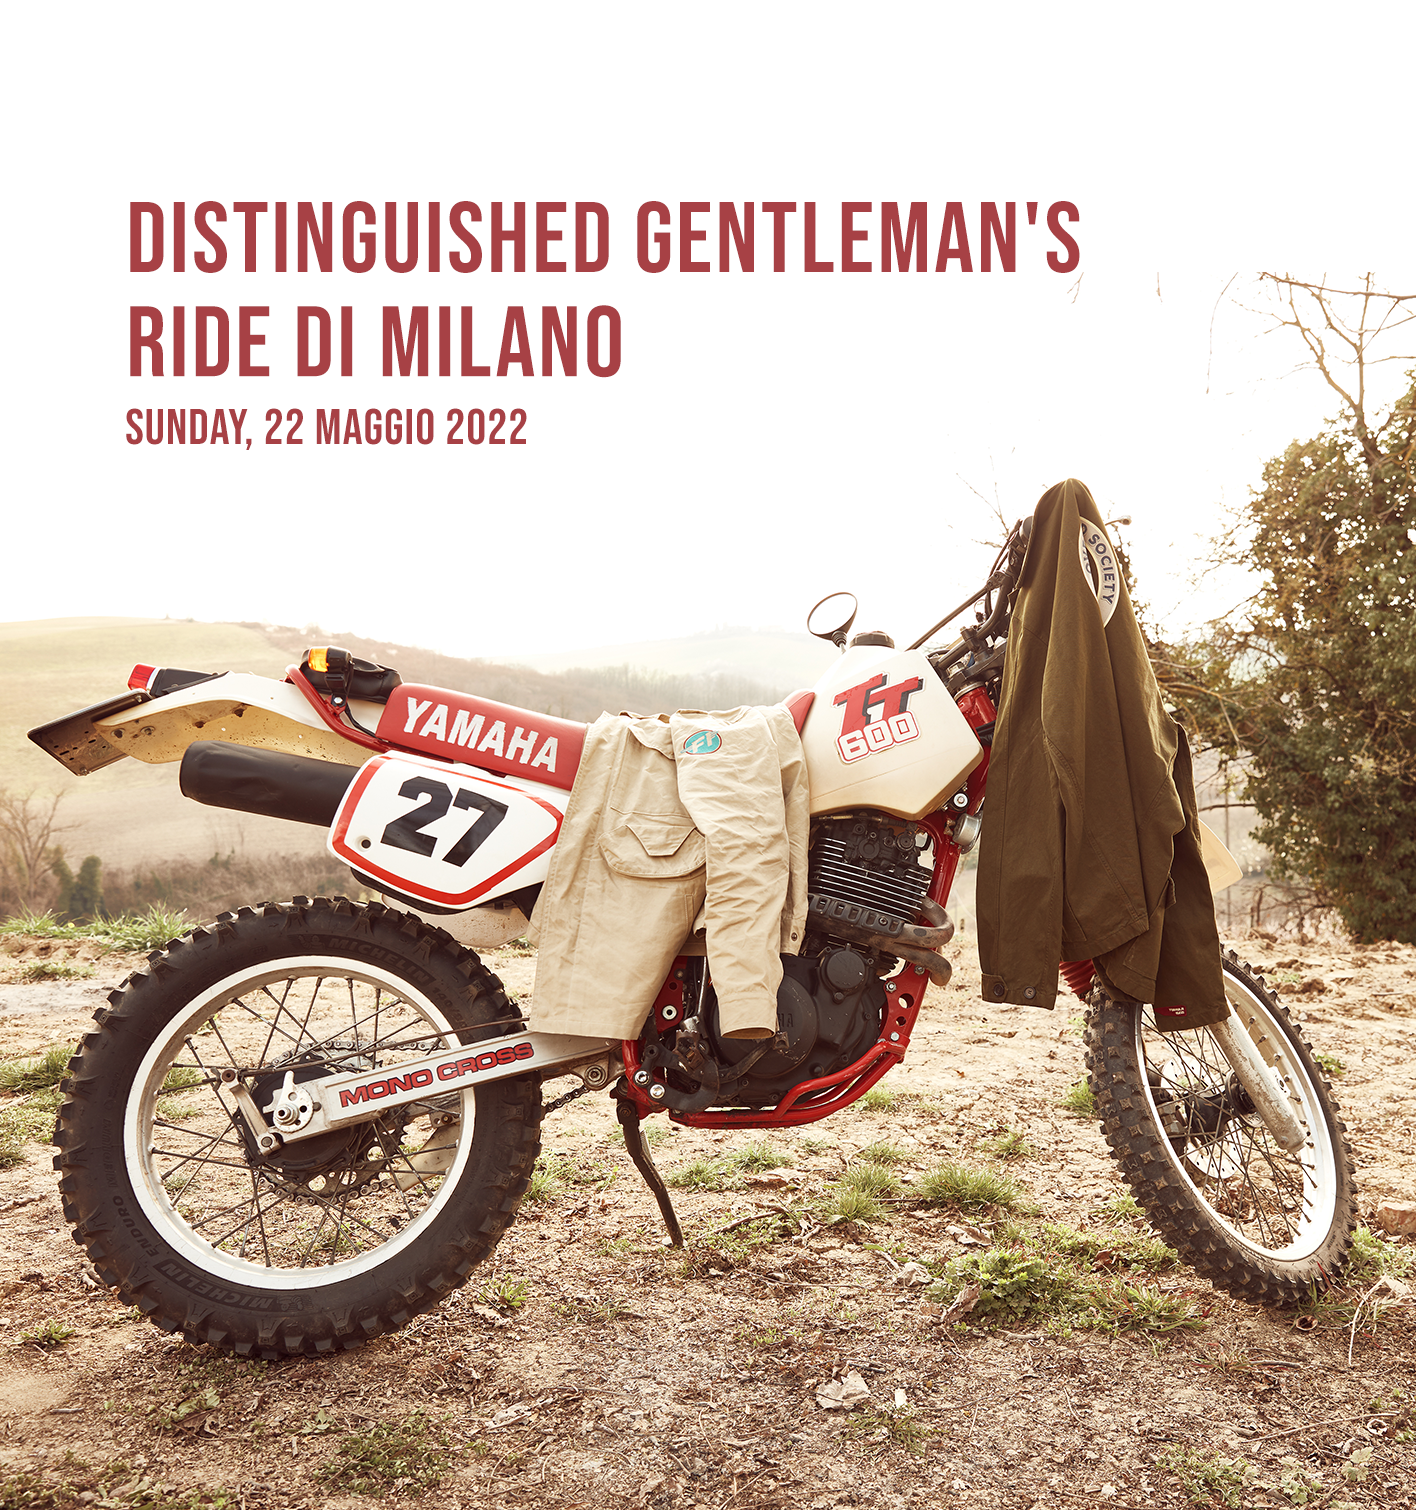 The Distinguished Gentleman's Ride Milano